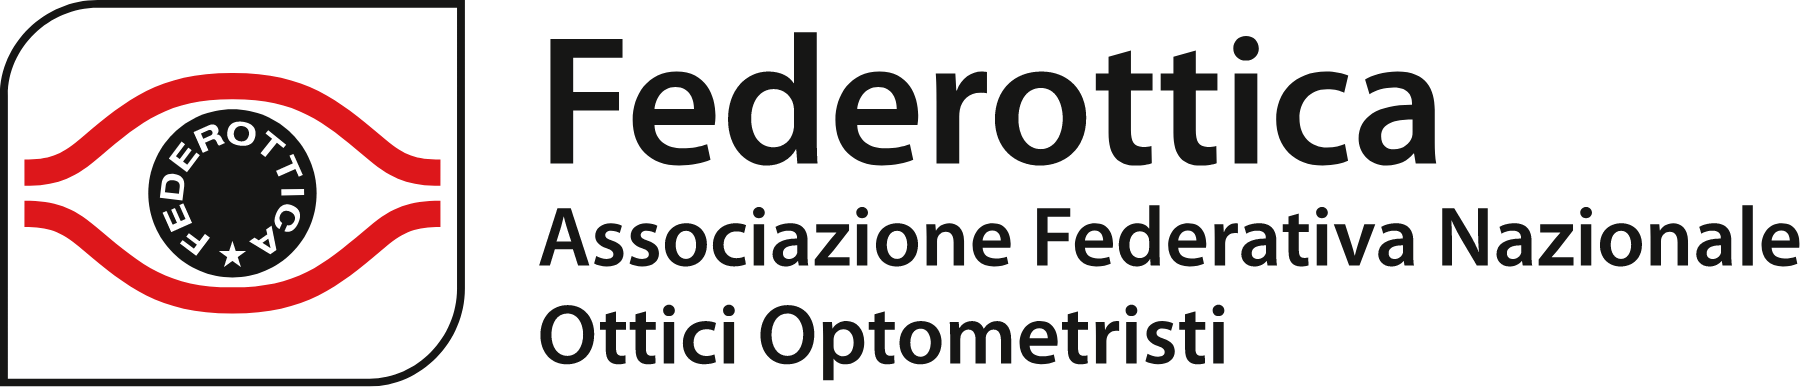 Federottica - Associazione Federativa Nazionale Ottici Optometristi